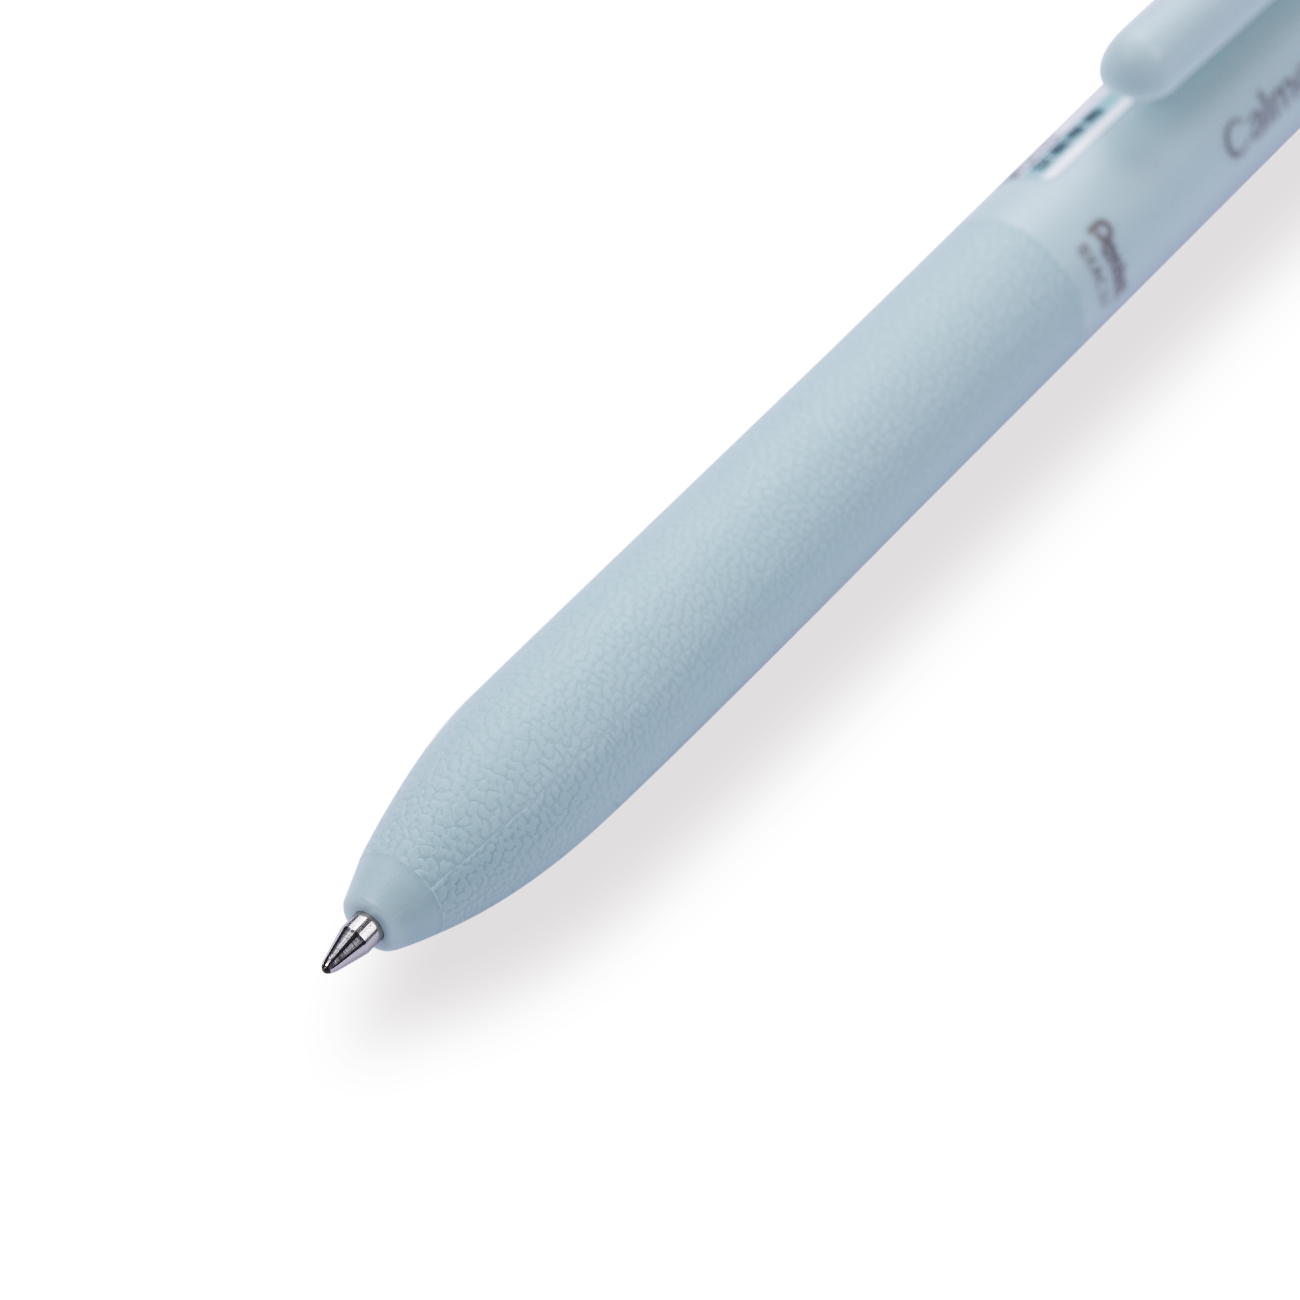 Pentel Calme 3 Color Multi Pen - 0.7 mm - Sky Jade Body - Stationery Pal